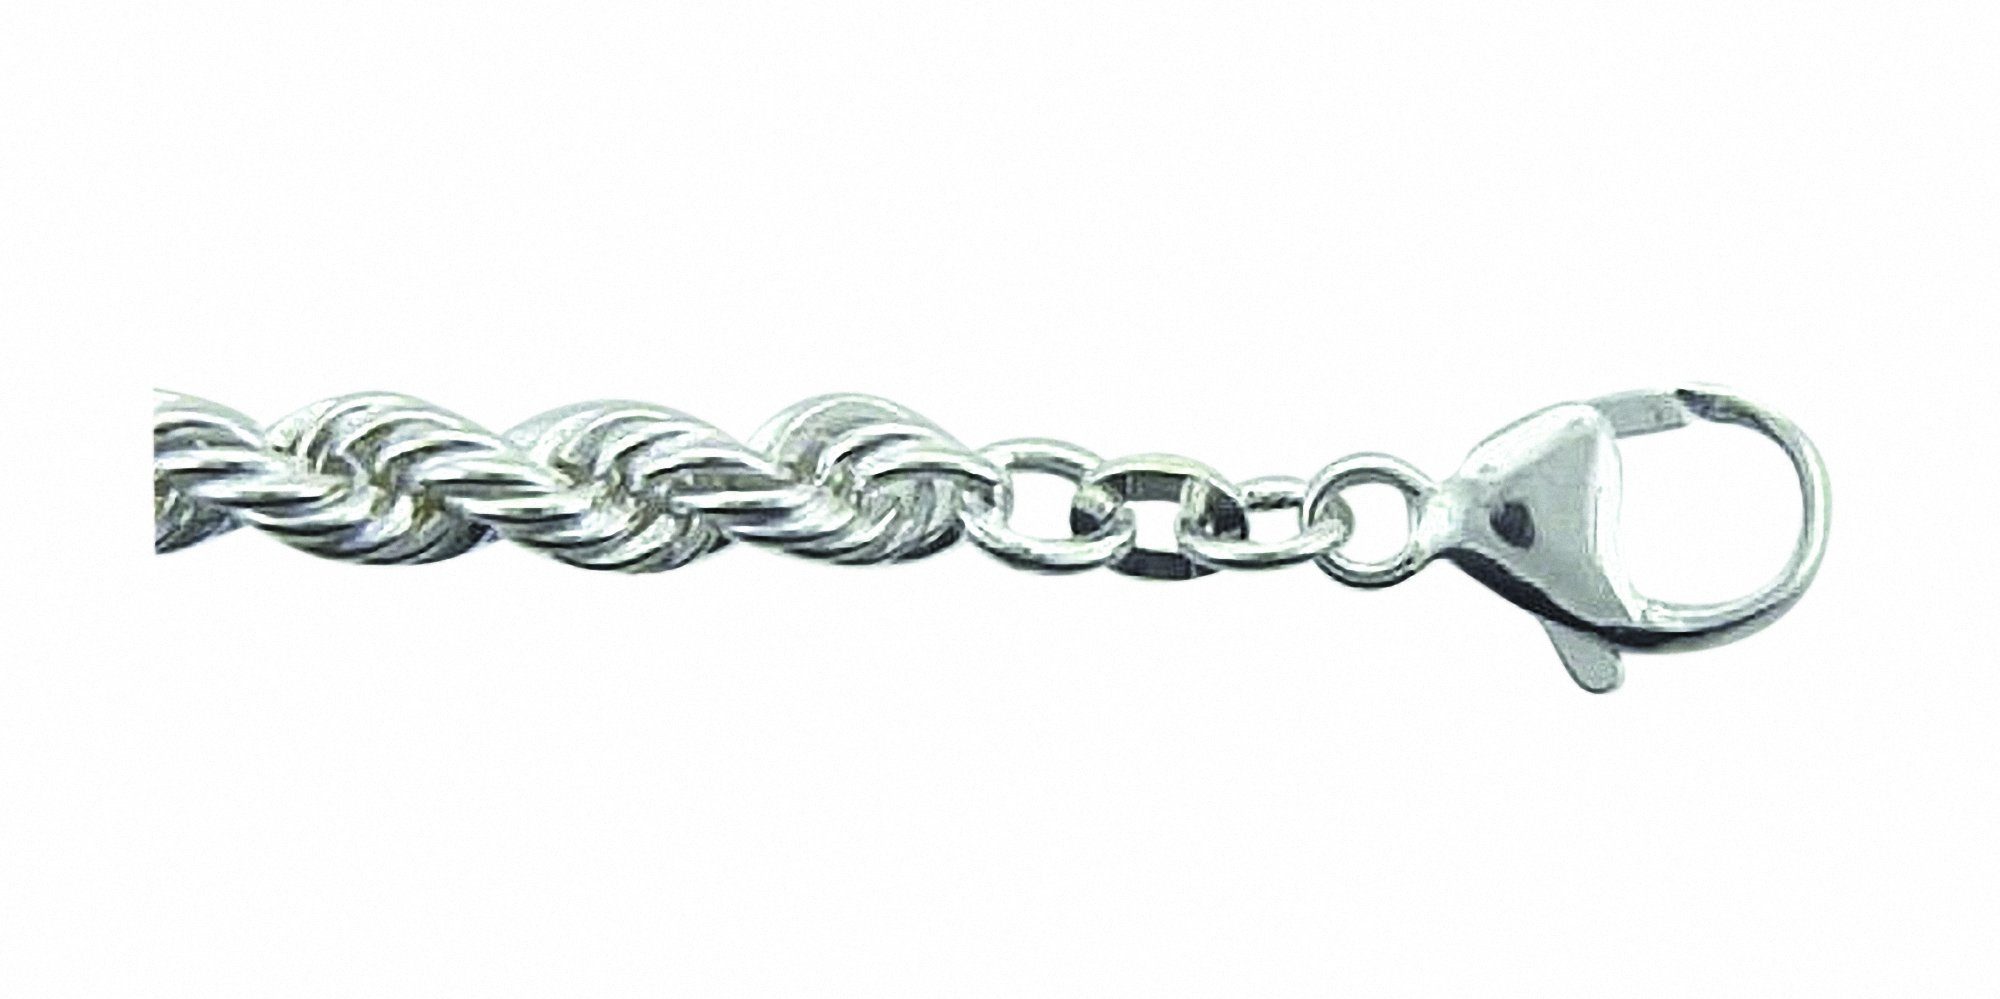 Damen Schmuck Adelia´s Silberarmband 925 Silber Kordel Armband 19 cm, 925 Sterling Silber Kordelkette Silberschmuck für Damen